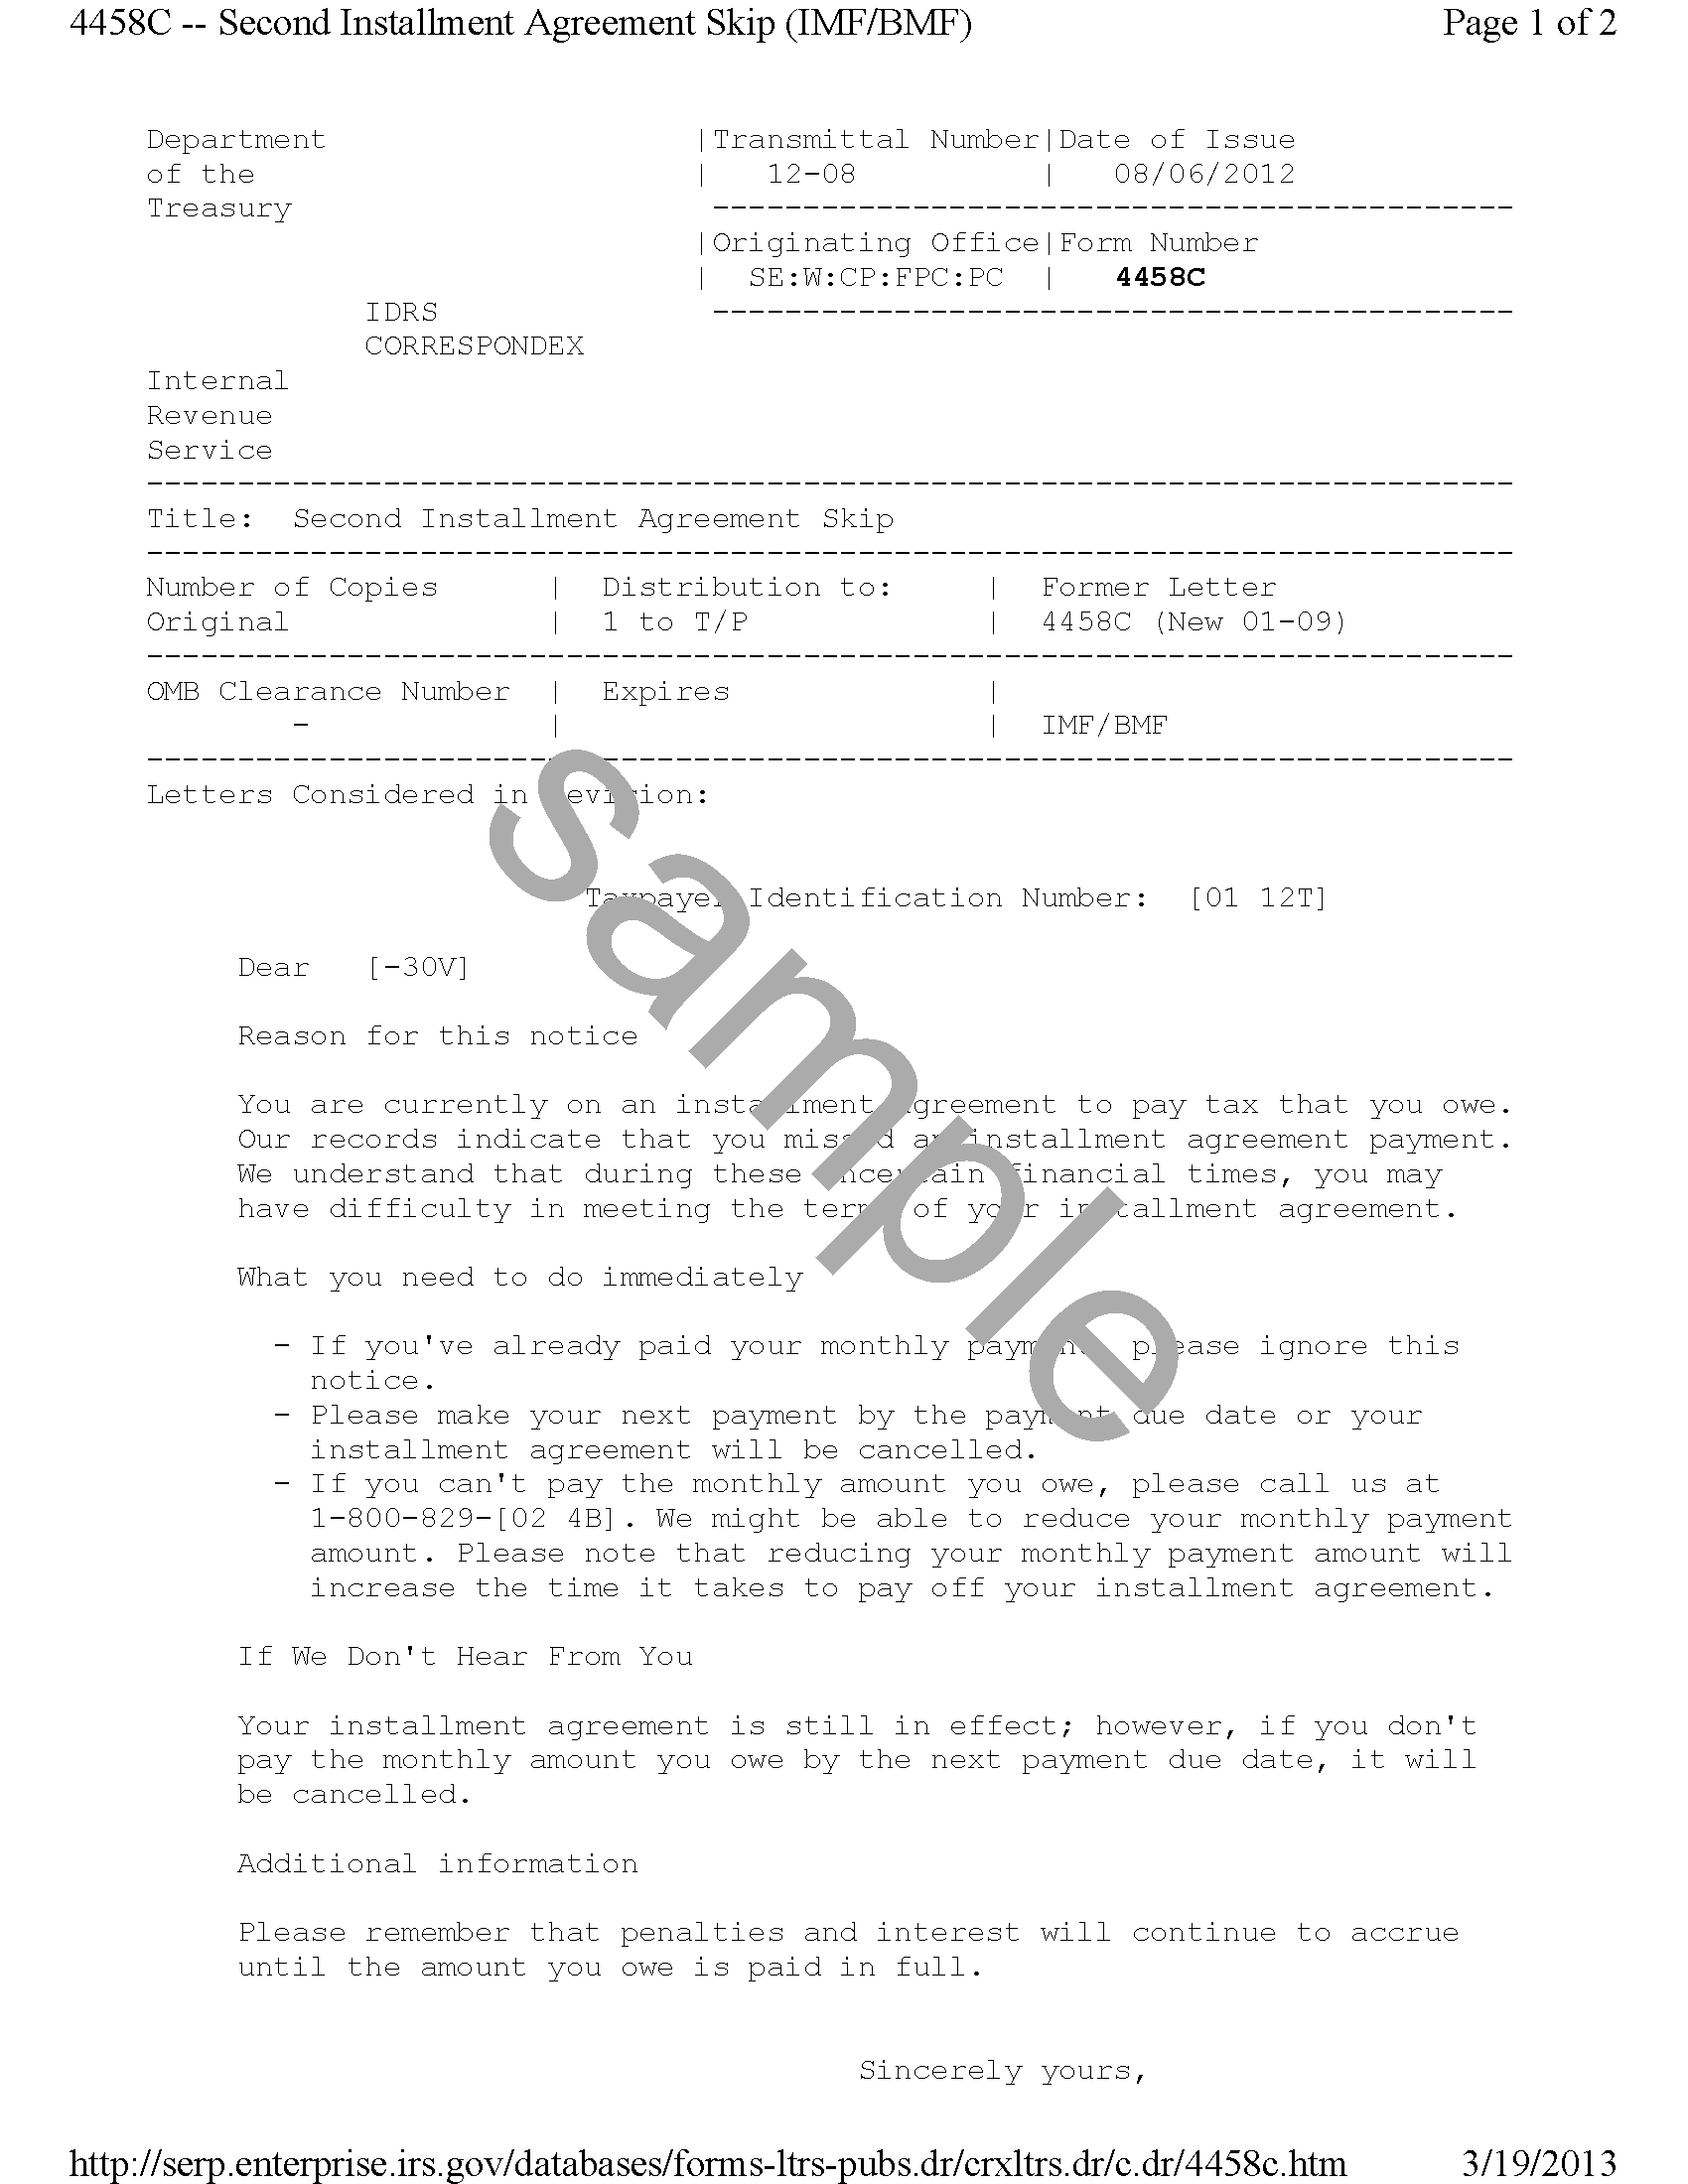 Irs Instalment Agreement Form Irs Letter 4458c Second Installment Agreement Skip Hr Block